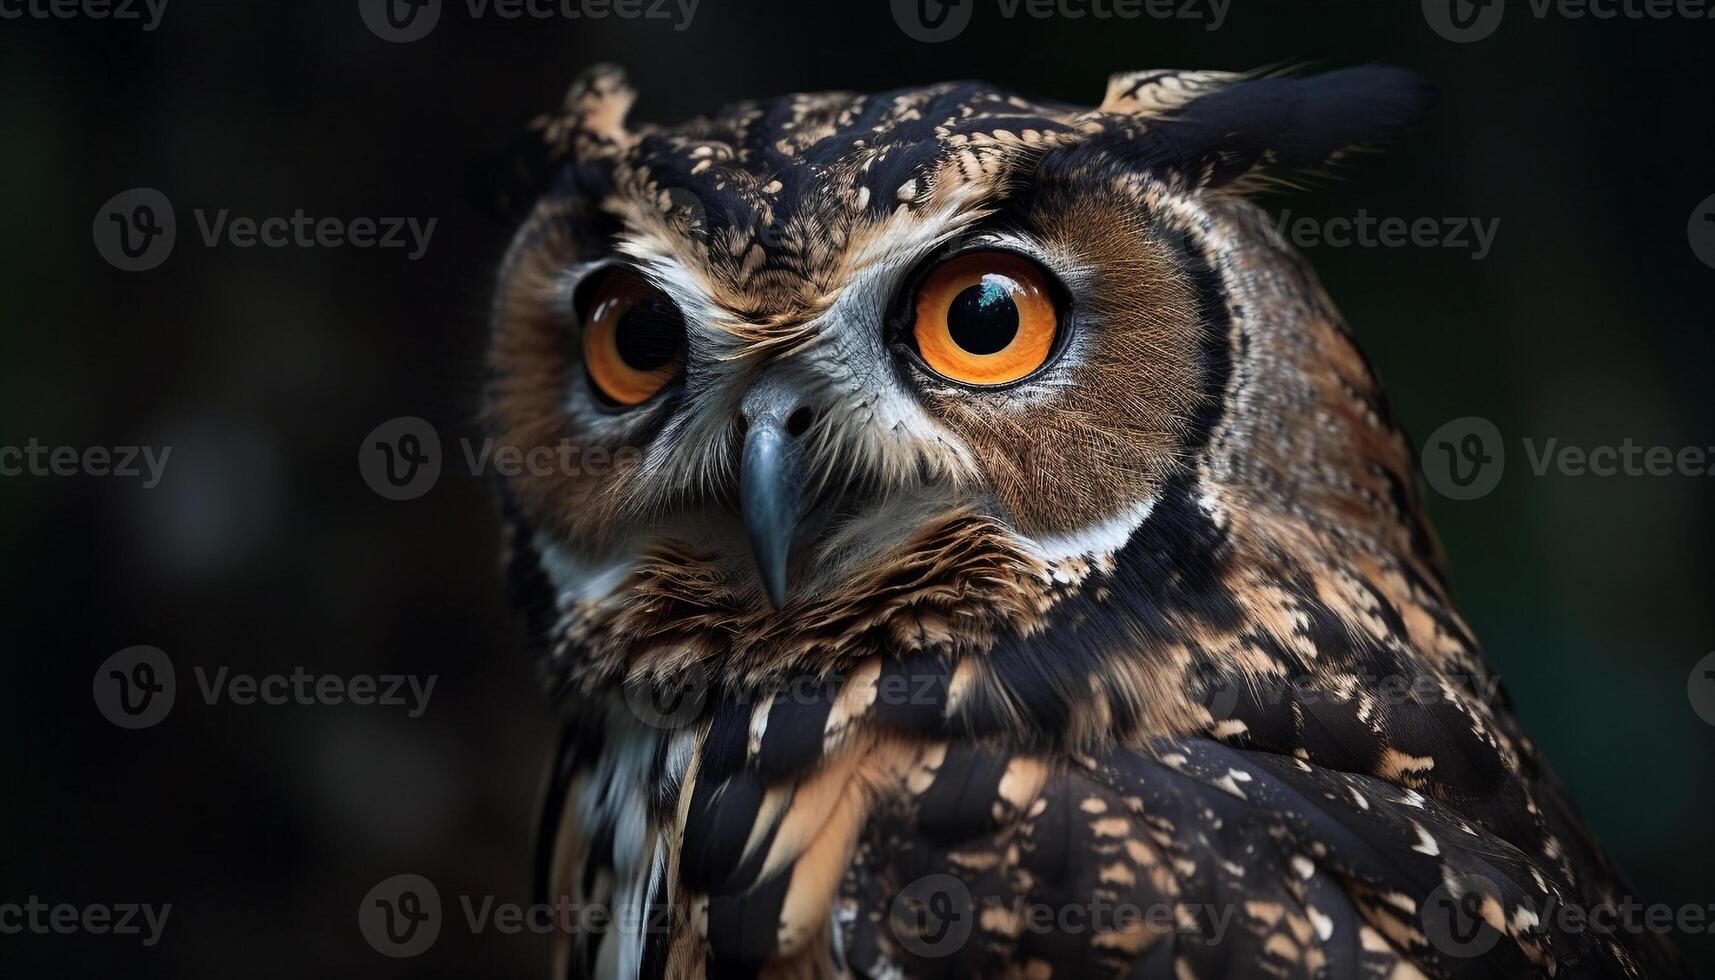 Bird of prey staring, wisdom in eye generated by AI photo